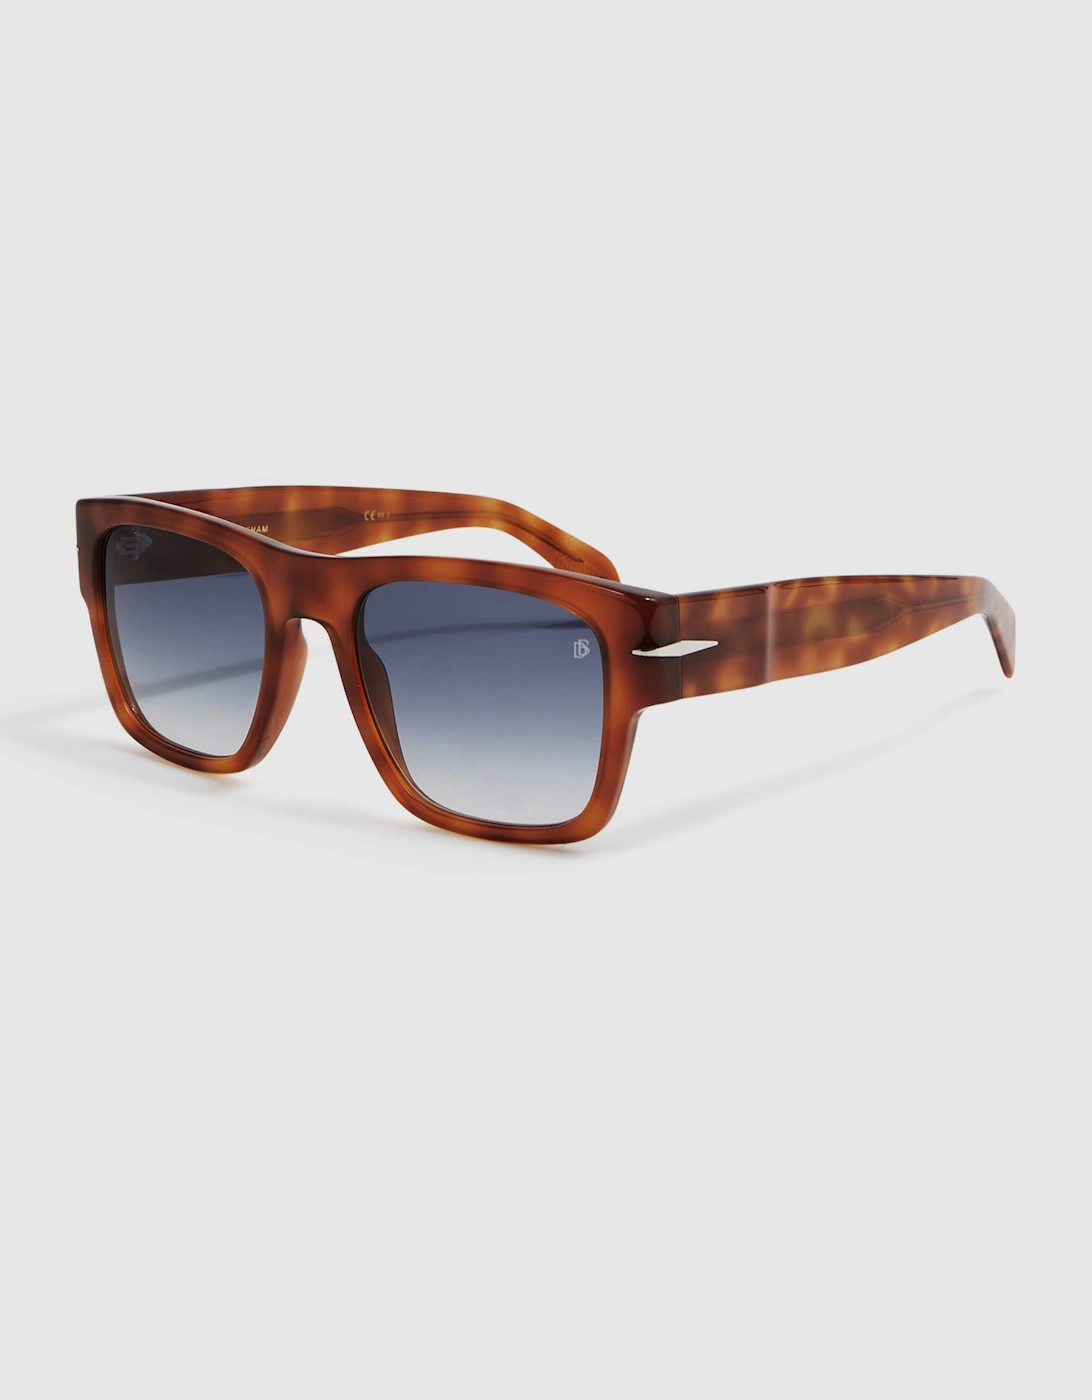 Eyewear by David Beckham Square Tortoiseshell Sunglasses, 2 of 1